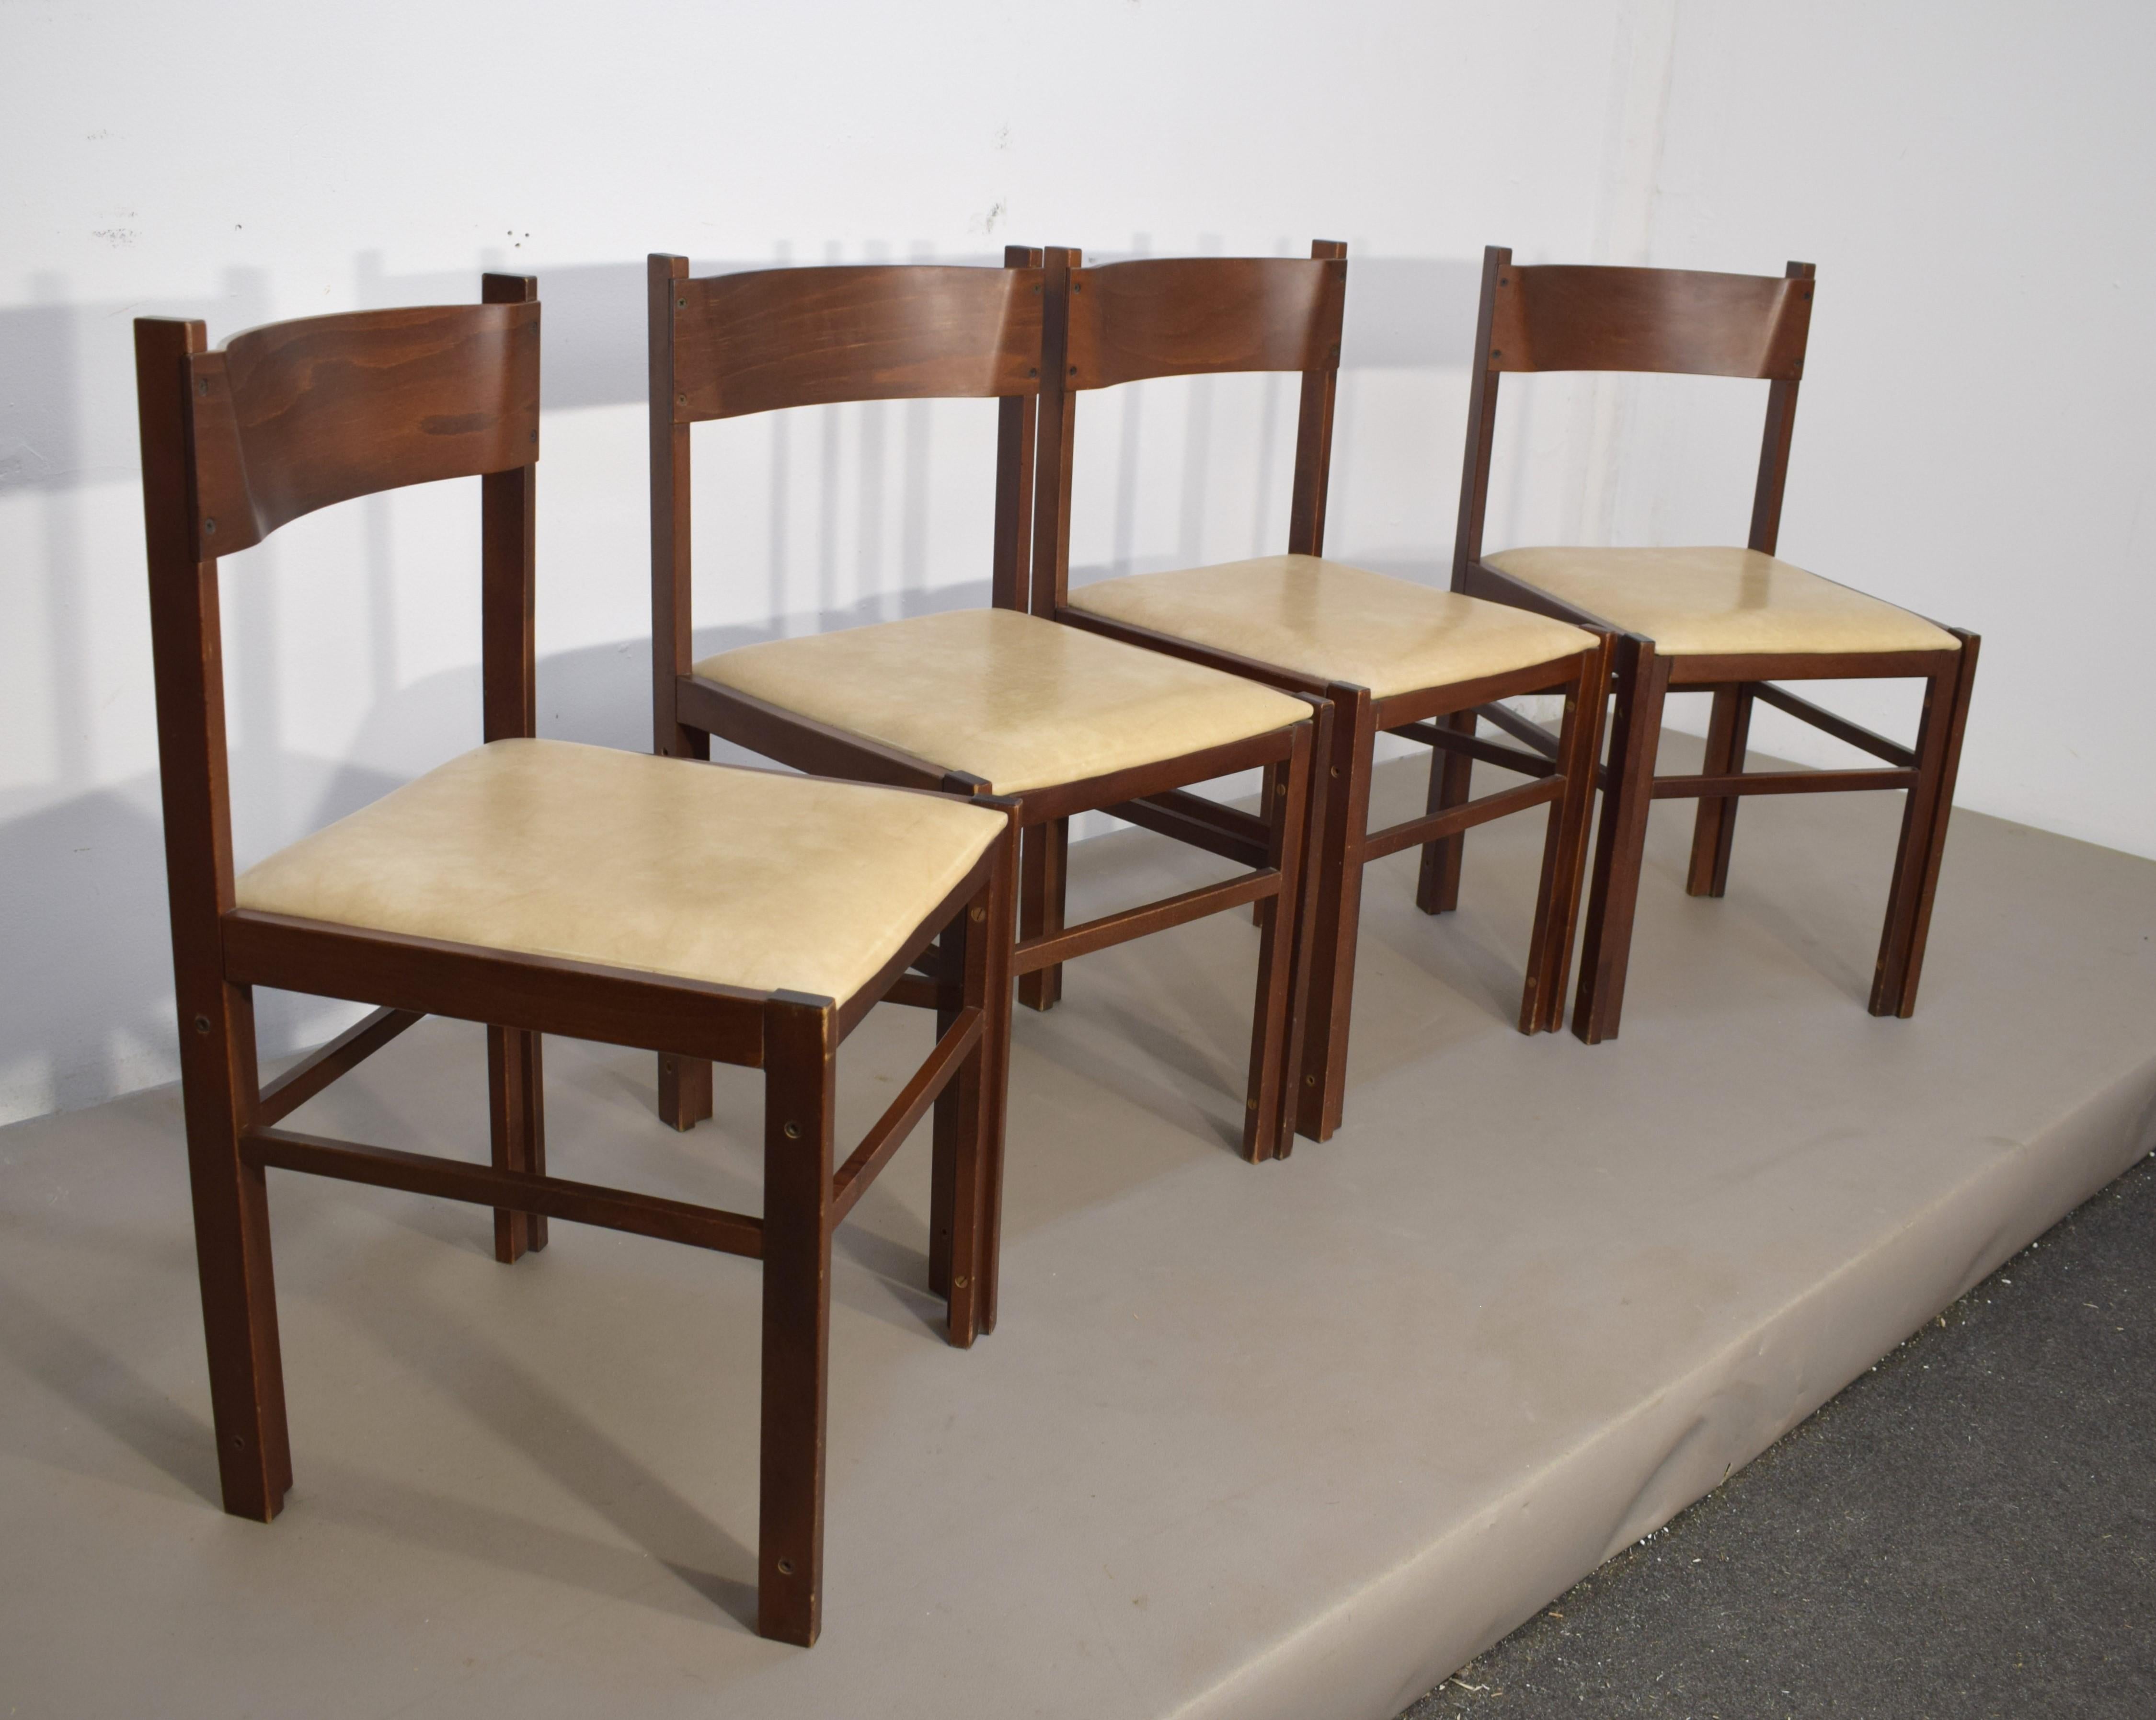 Set of Italian chairs by Dal Vera, 1960s.

Dimensions: H= 79 cm; W= 42 cm; D= 43 cm; H seat= 44 cm.